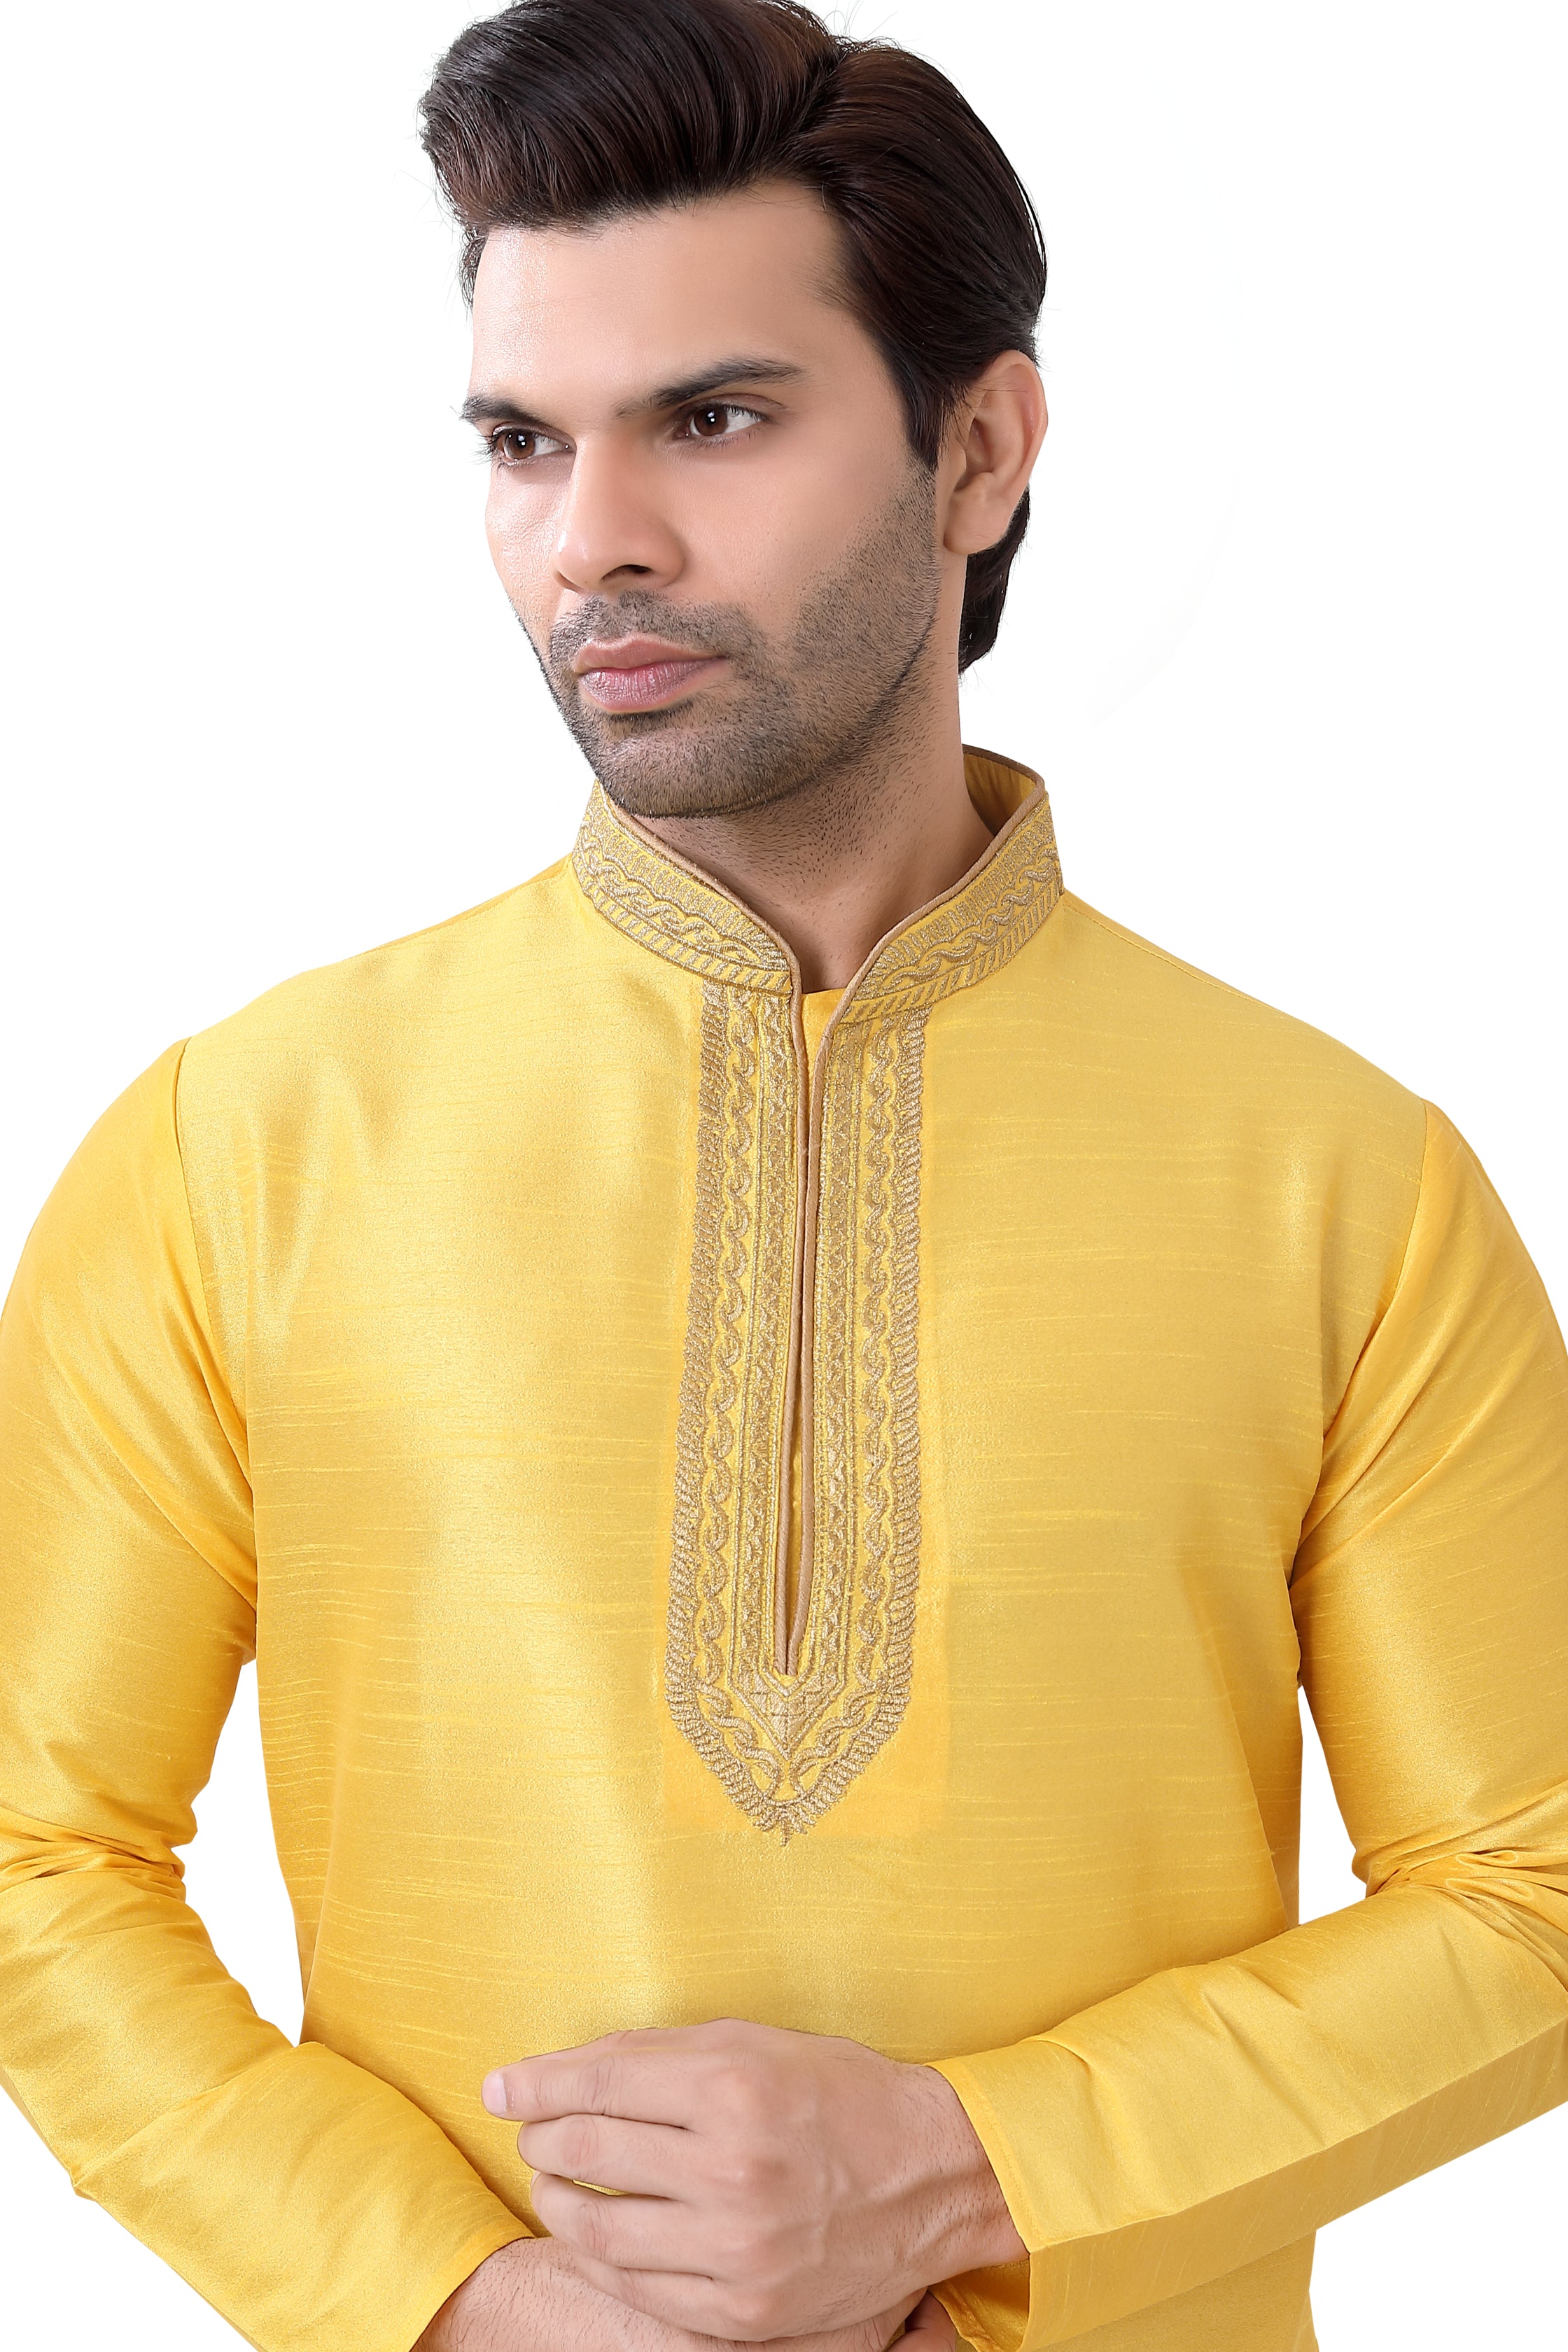 Banarasi Dupion Silk Short Kurta with embroidery in Yellow color - Premium kurta pajama from Dapper Ethnic - Just $49! Shop now at Dulhan Exclusives